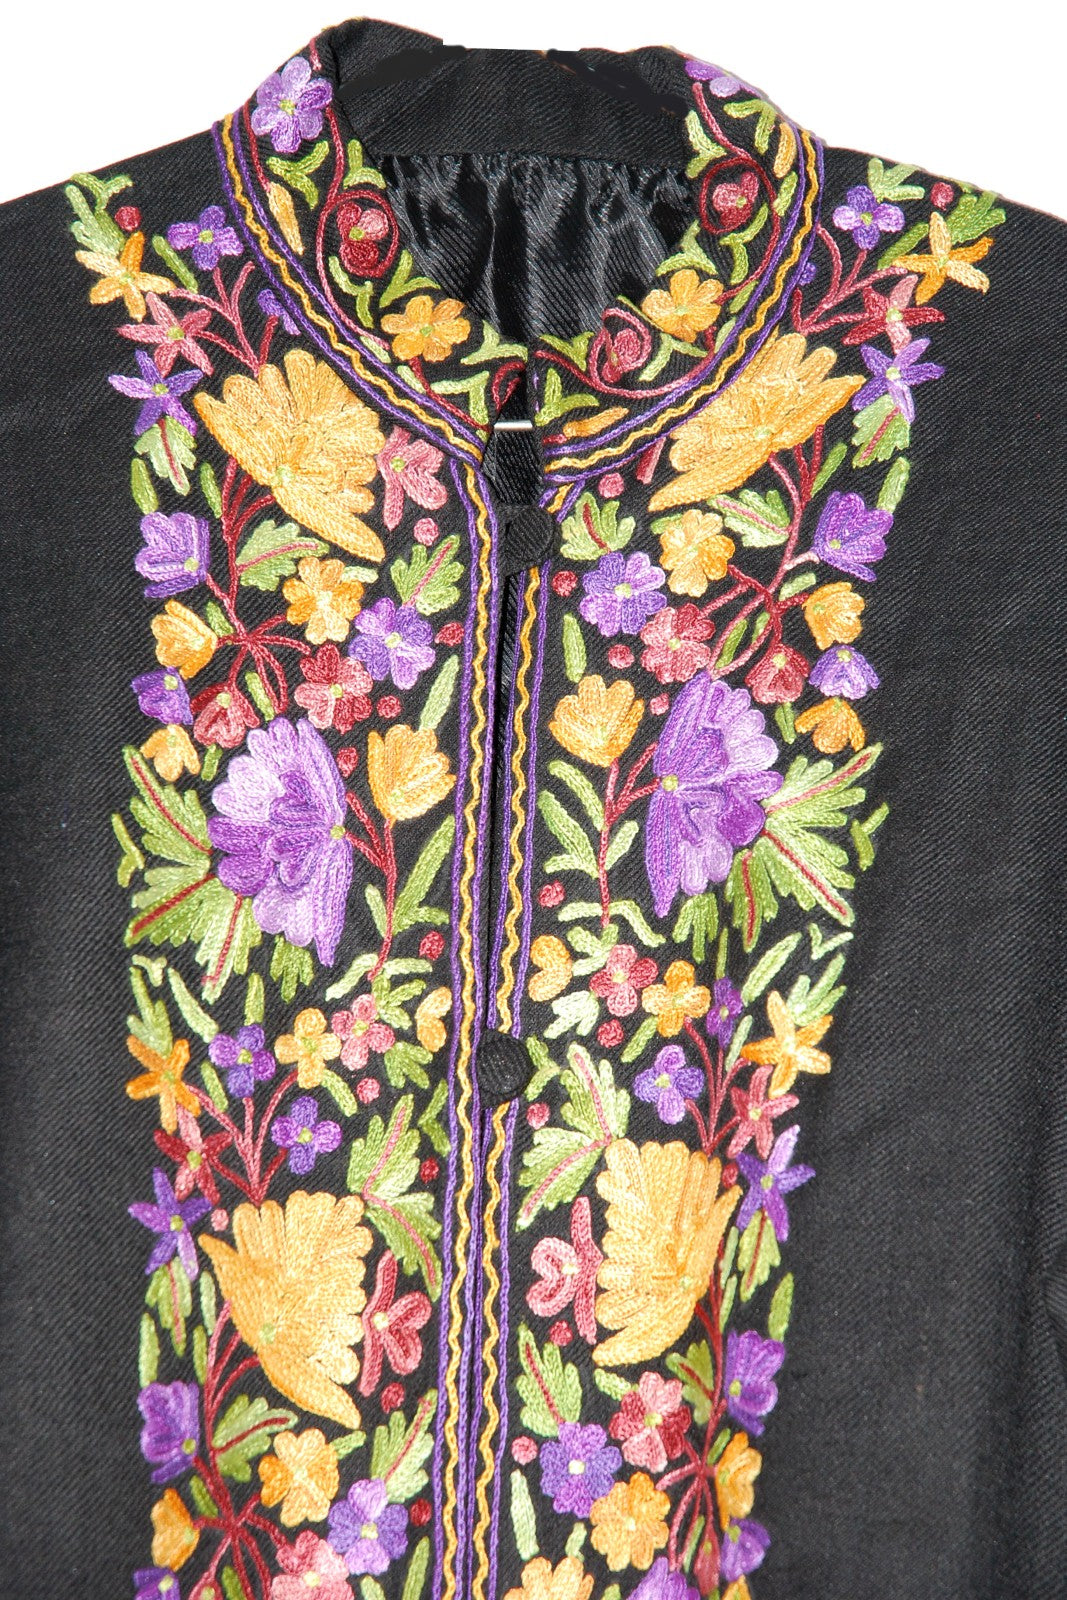 Woolen Coat Long Jacket Black, Multicolor Embroidery #BD-113